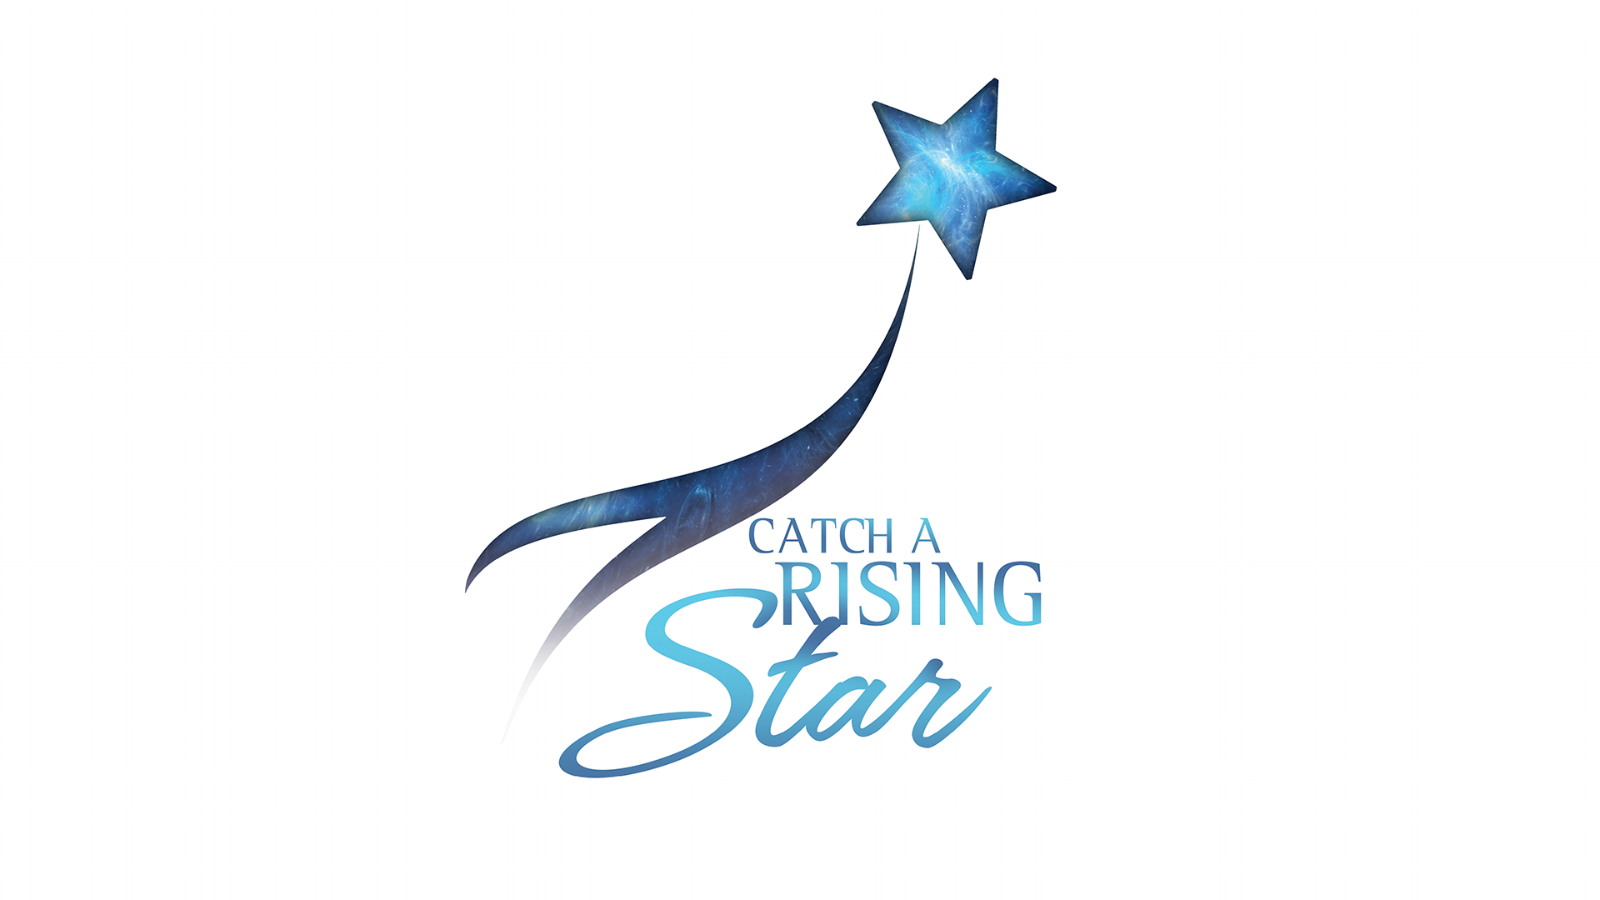 Catch a Rising Star